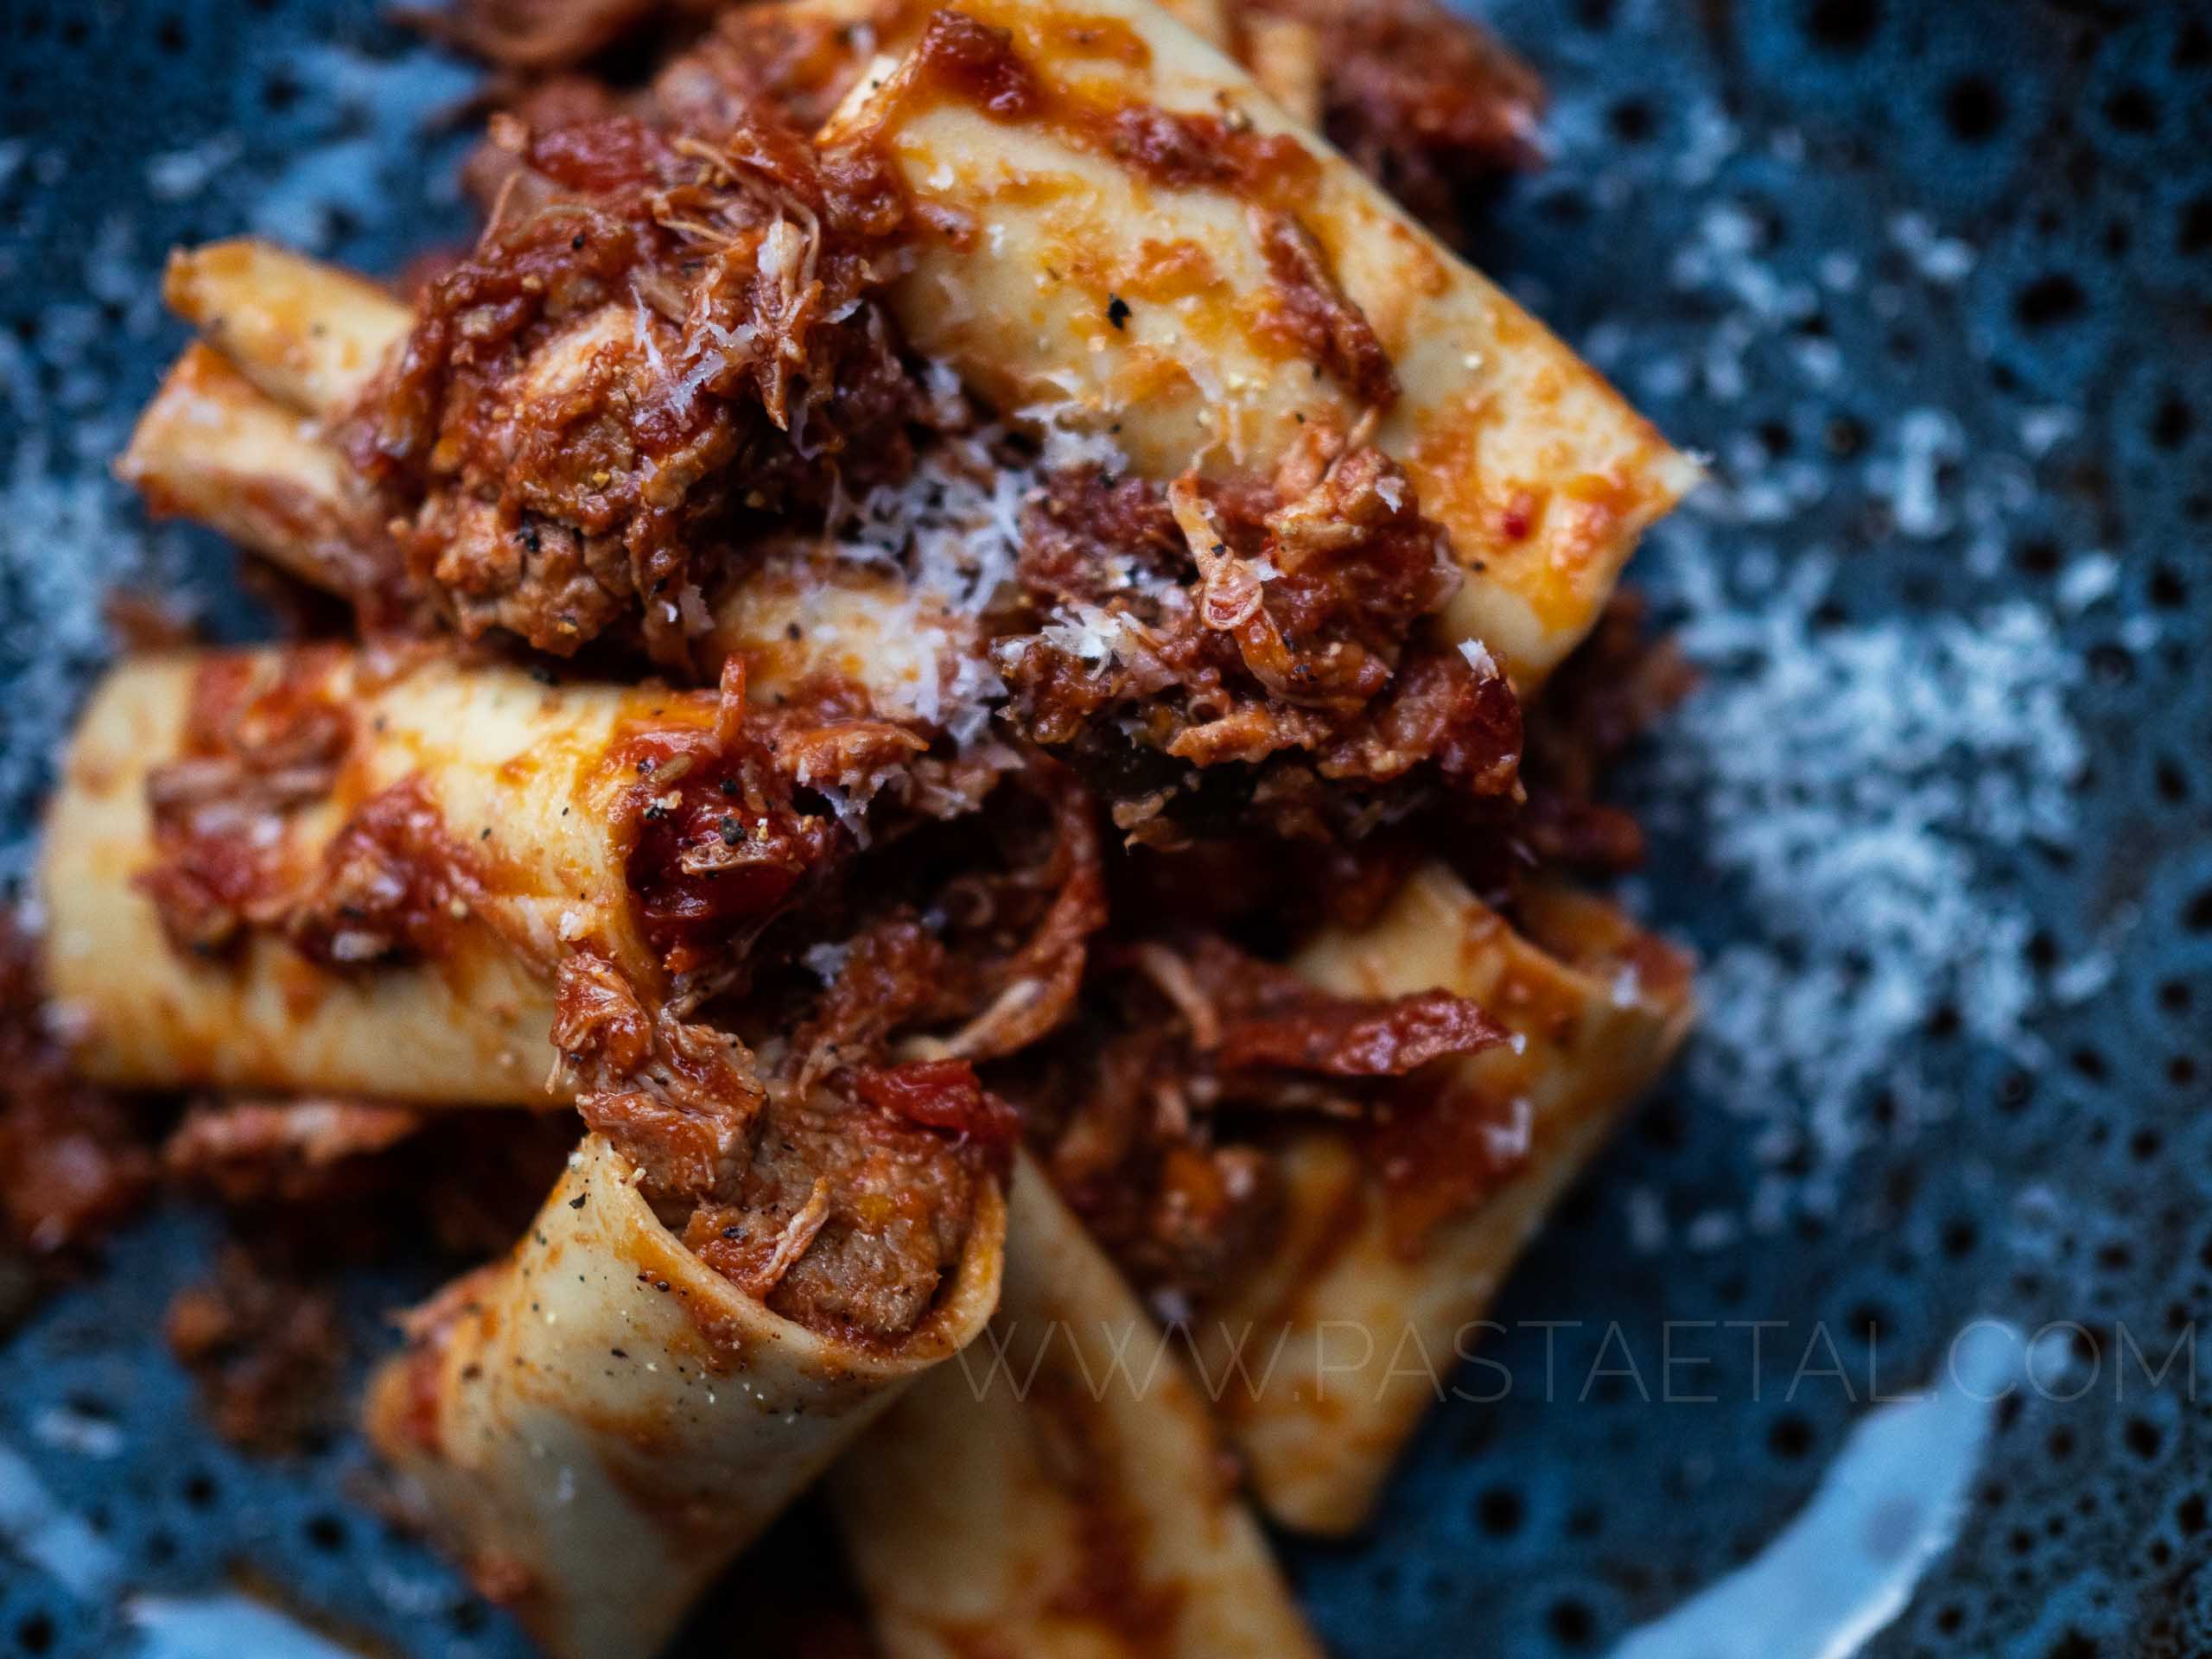 https://pastaetal.com/wp-content/uploads/2020/05/blog-close-up-of-paccheri-pasta-stuffed-with-pork-shoulder-ragu.jpg